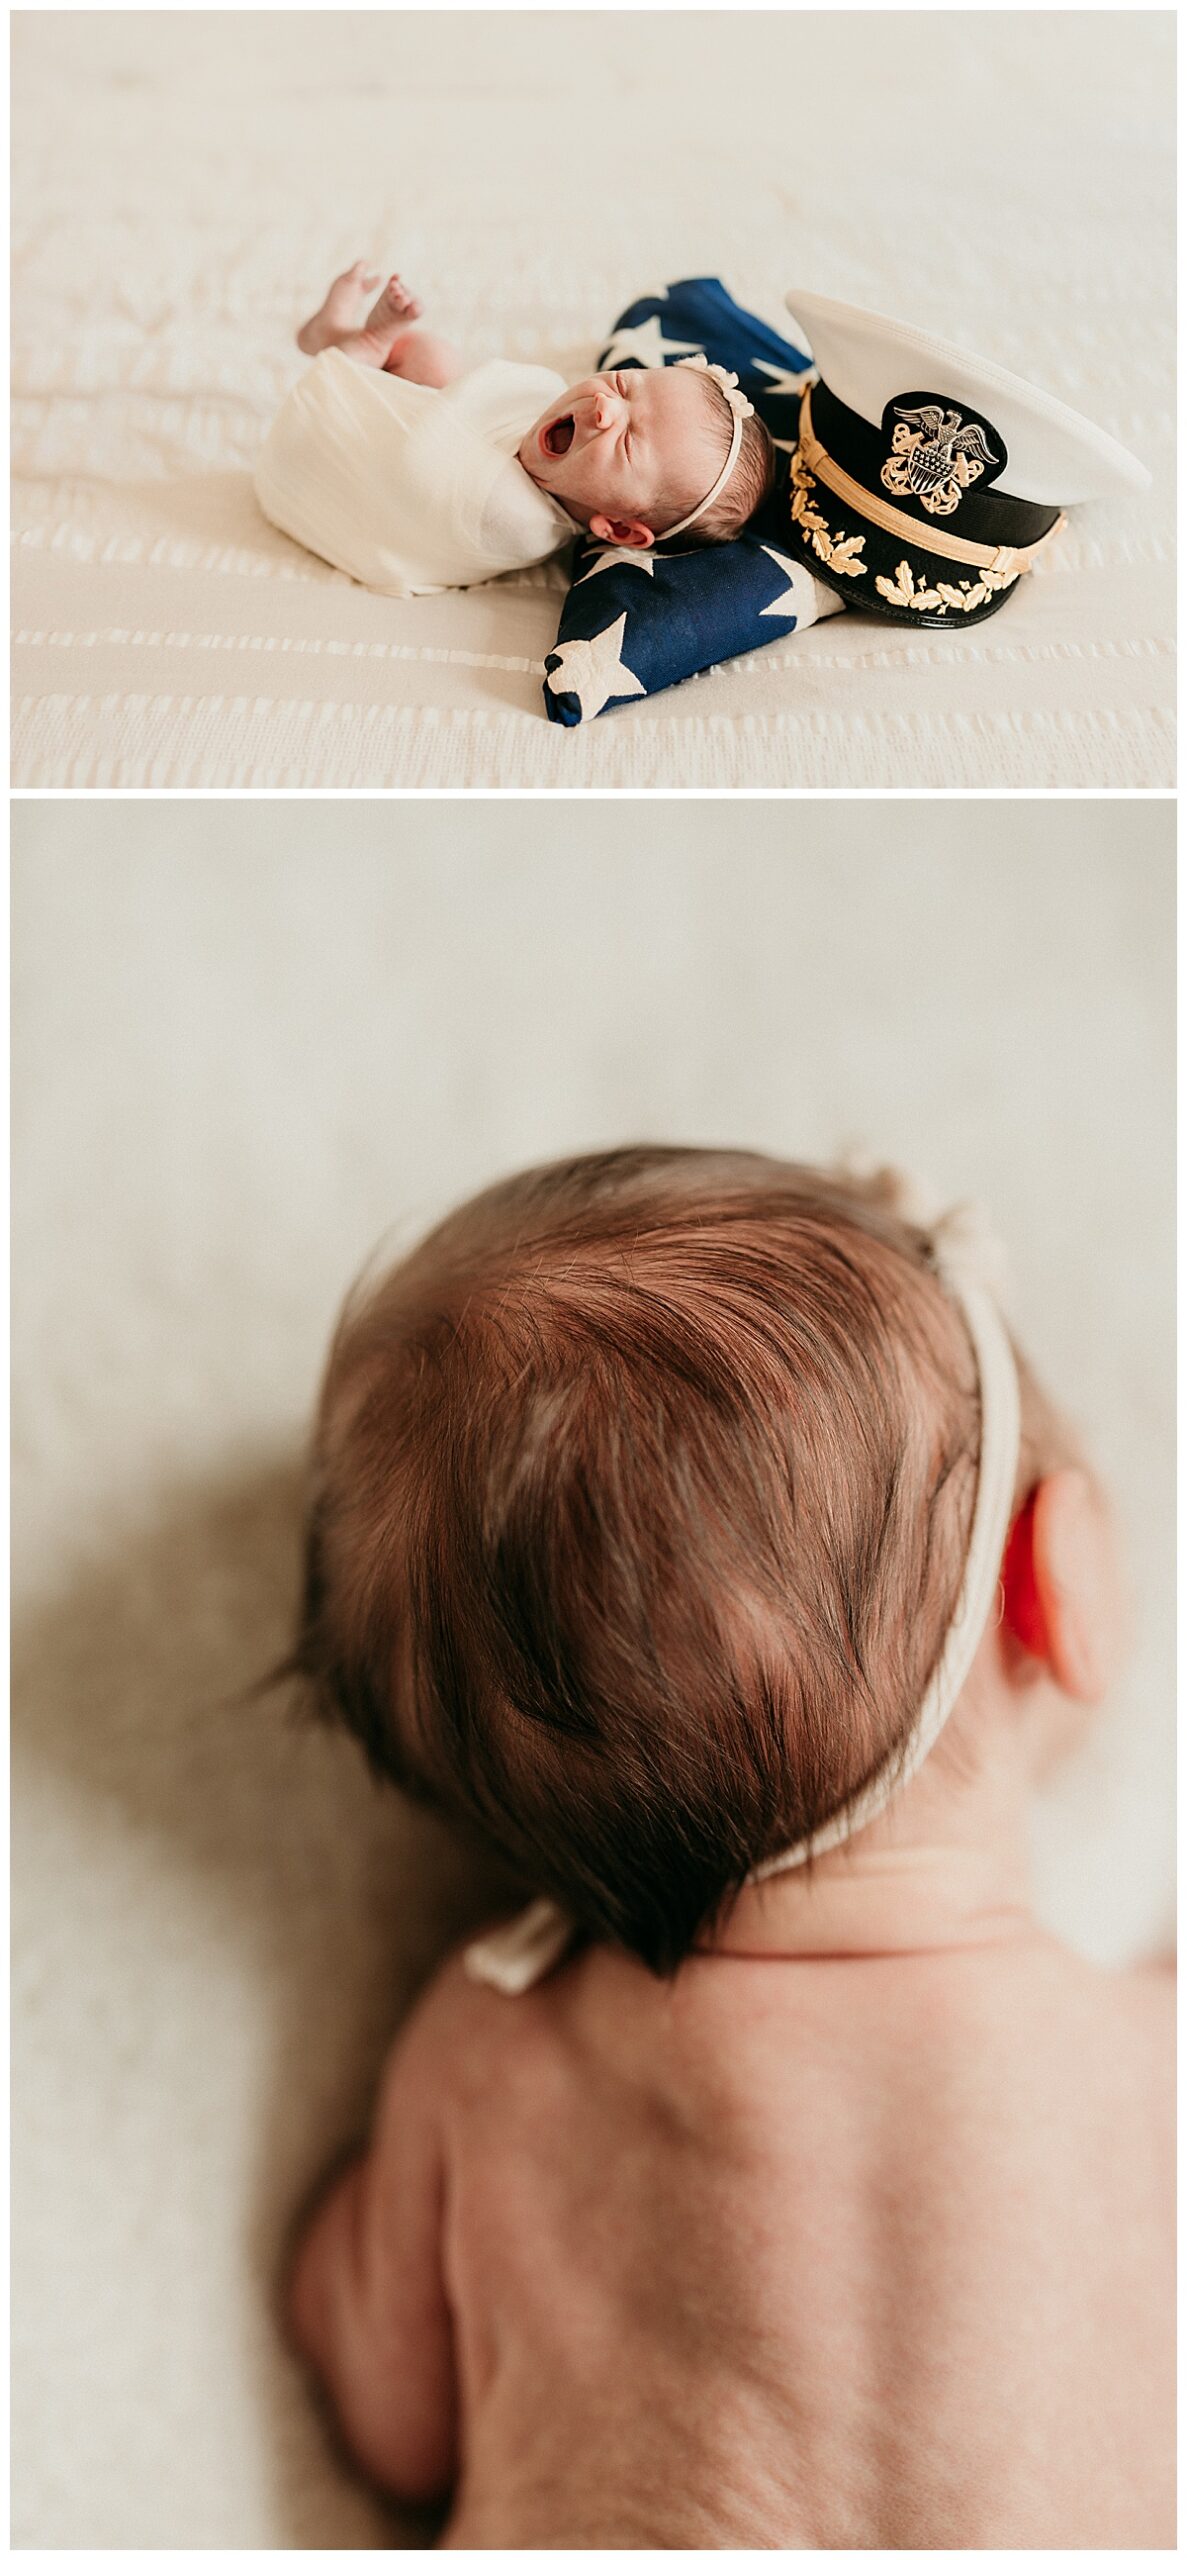 Baby lays on white cloth for Washington DC Newborn Photographer